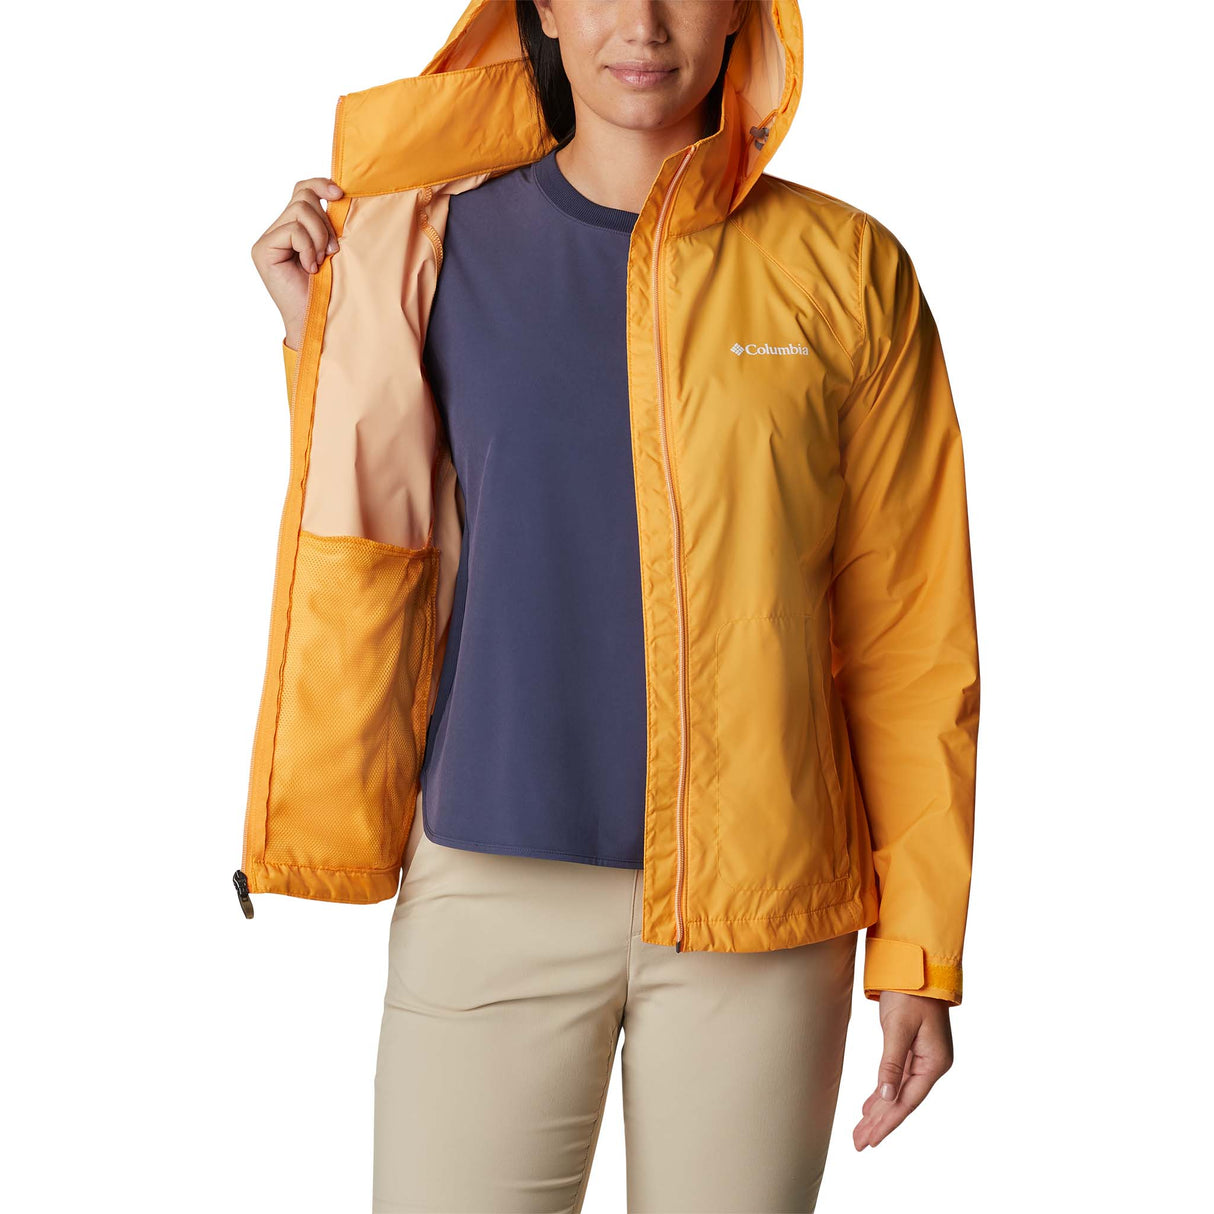 Columbia Switchback III manteau coquille mango pour femme poche intérieure